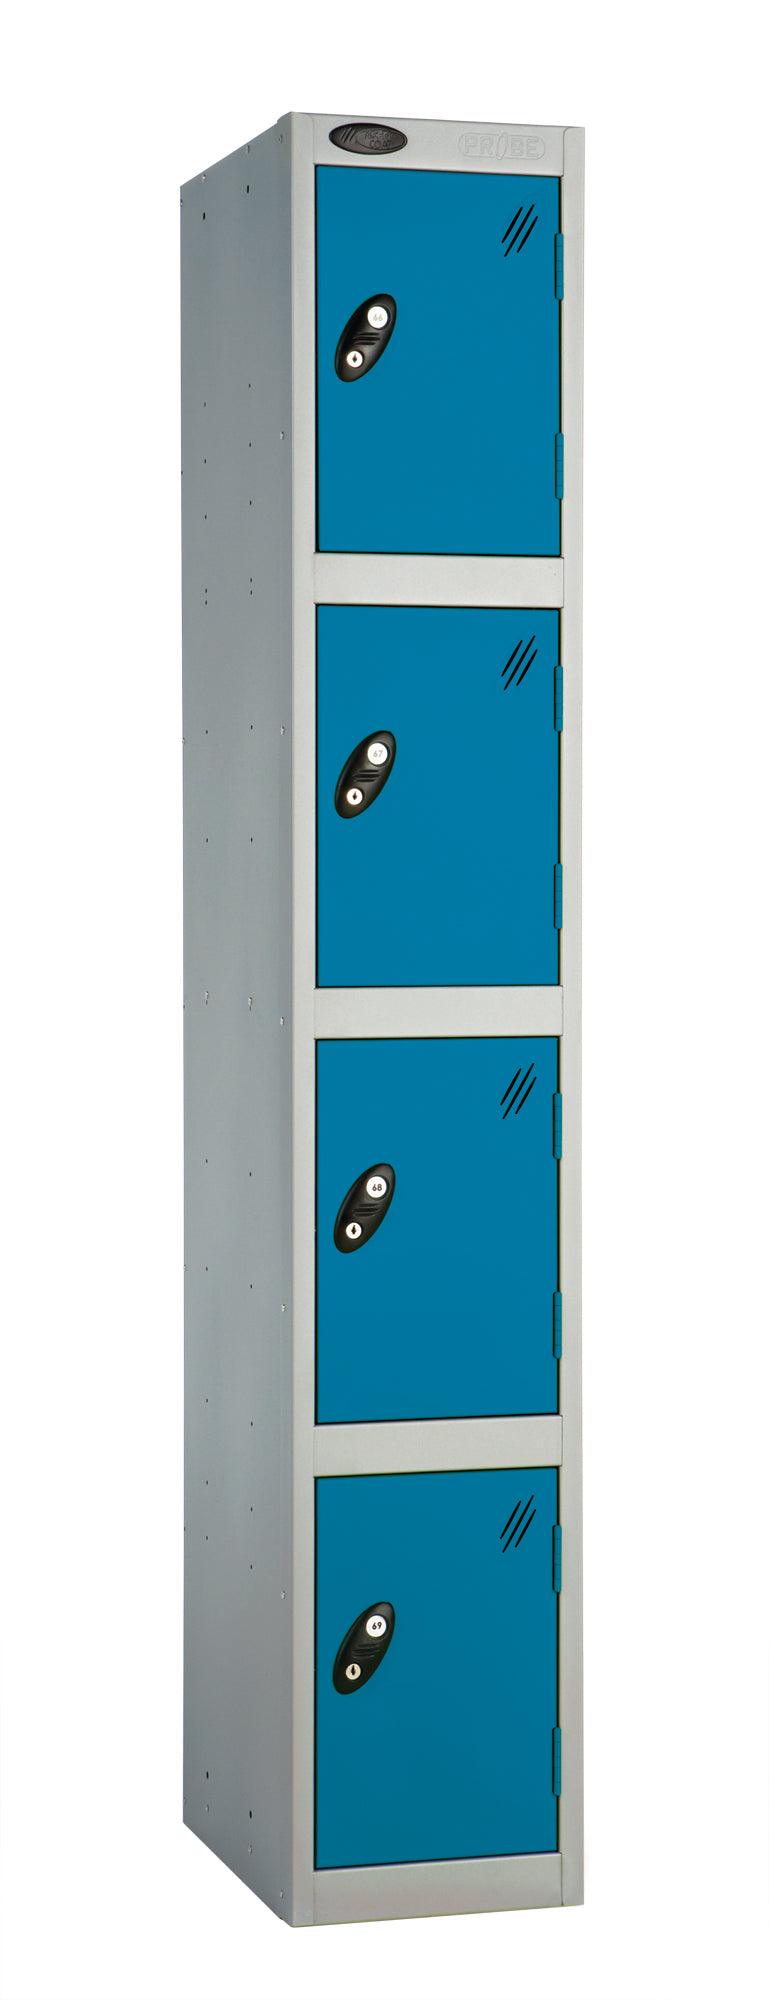 PROBEBOX STANDARD 1 NEST STEEL LOCKERS - ELECTRIC BLUE 4 DOOR Storage Lockers > Lockers > Cabinets > Storage > Probe > One Stop For Safety   